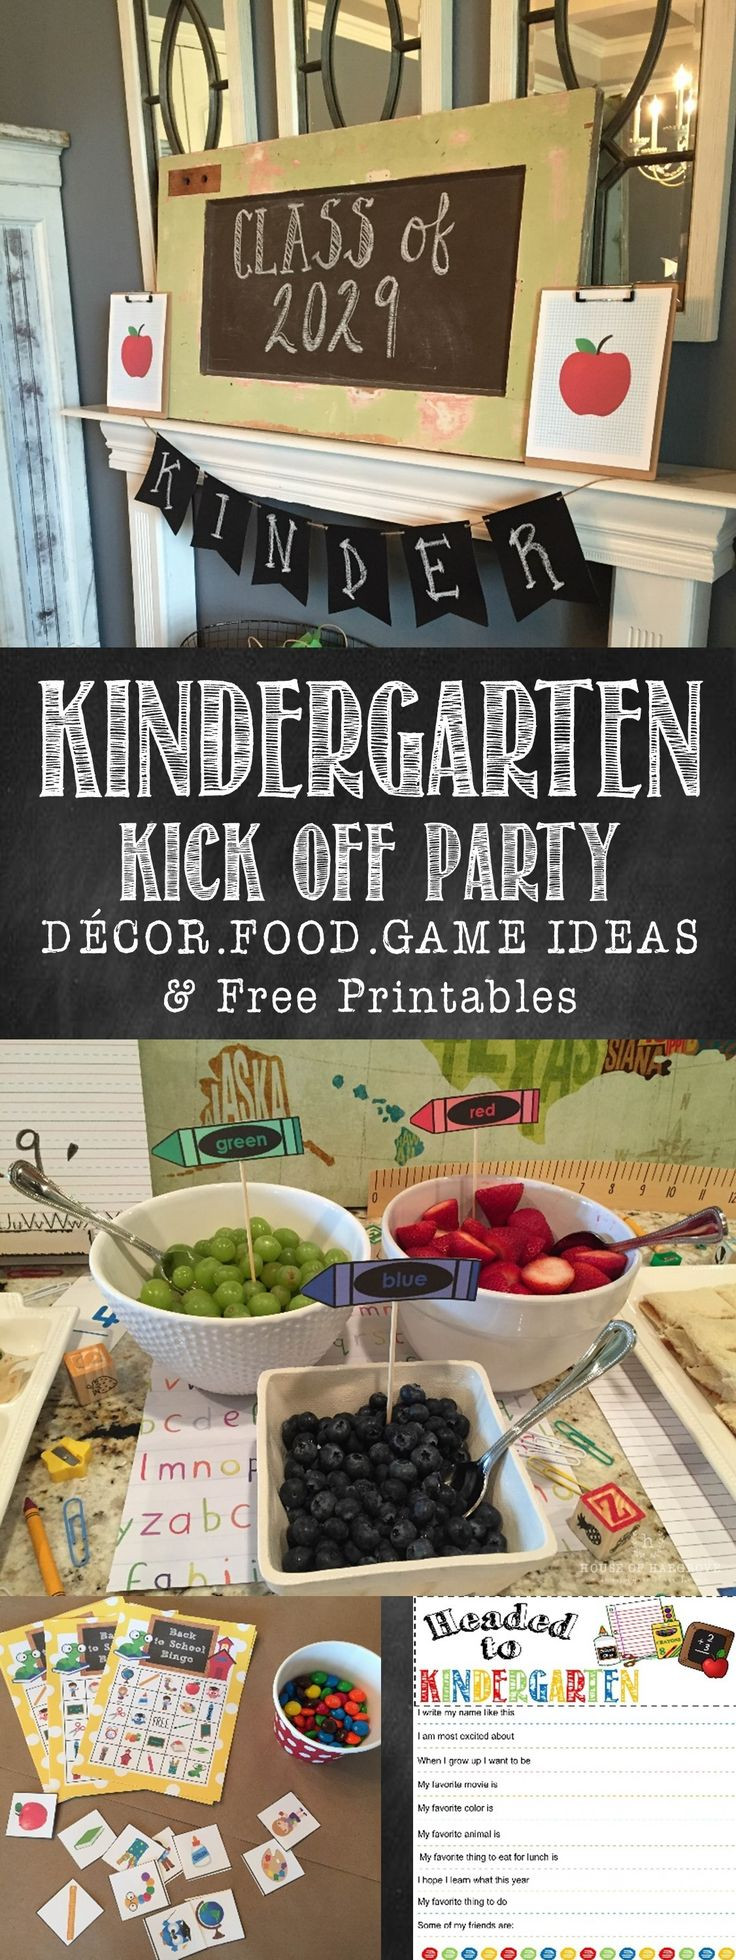 Preschool Graduation Party Ideas
 25 best ideas about Kindergarten party on Pinterest